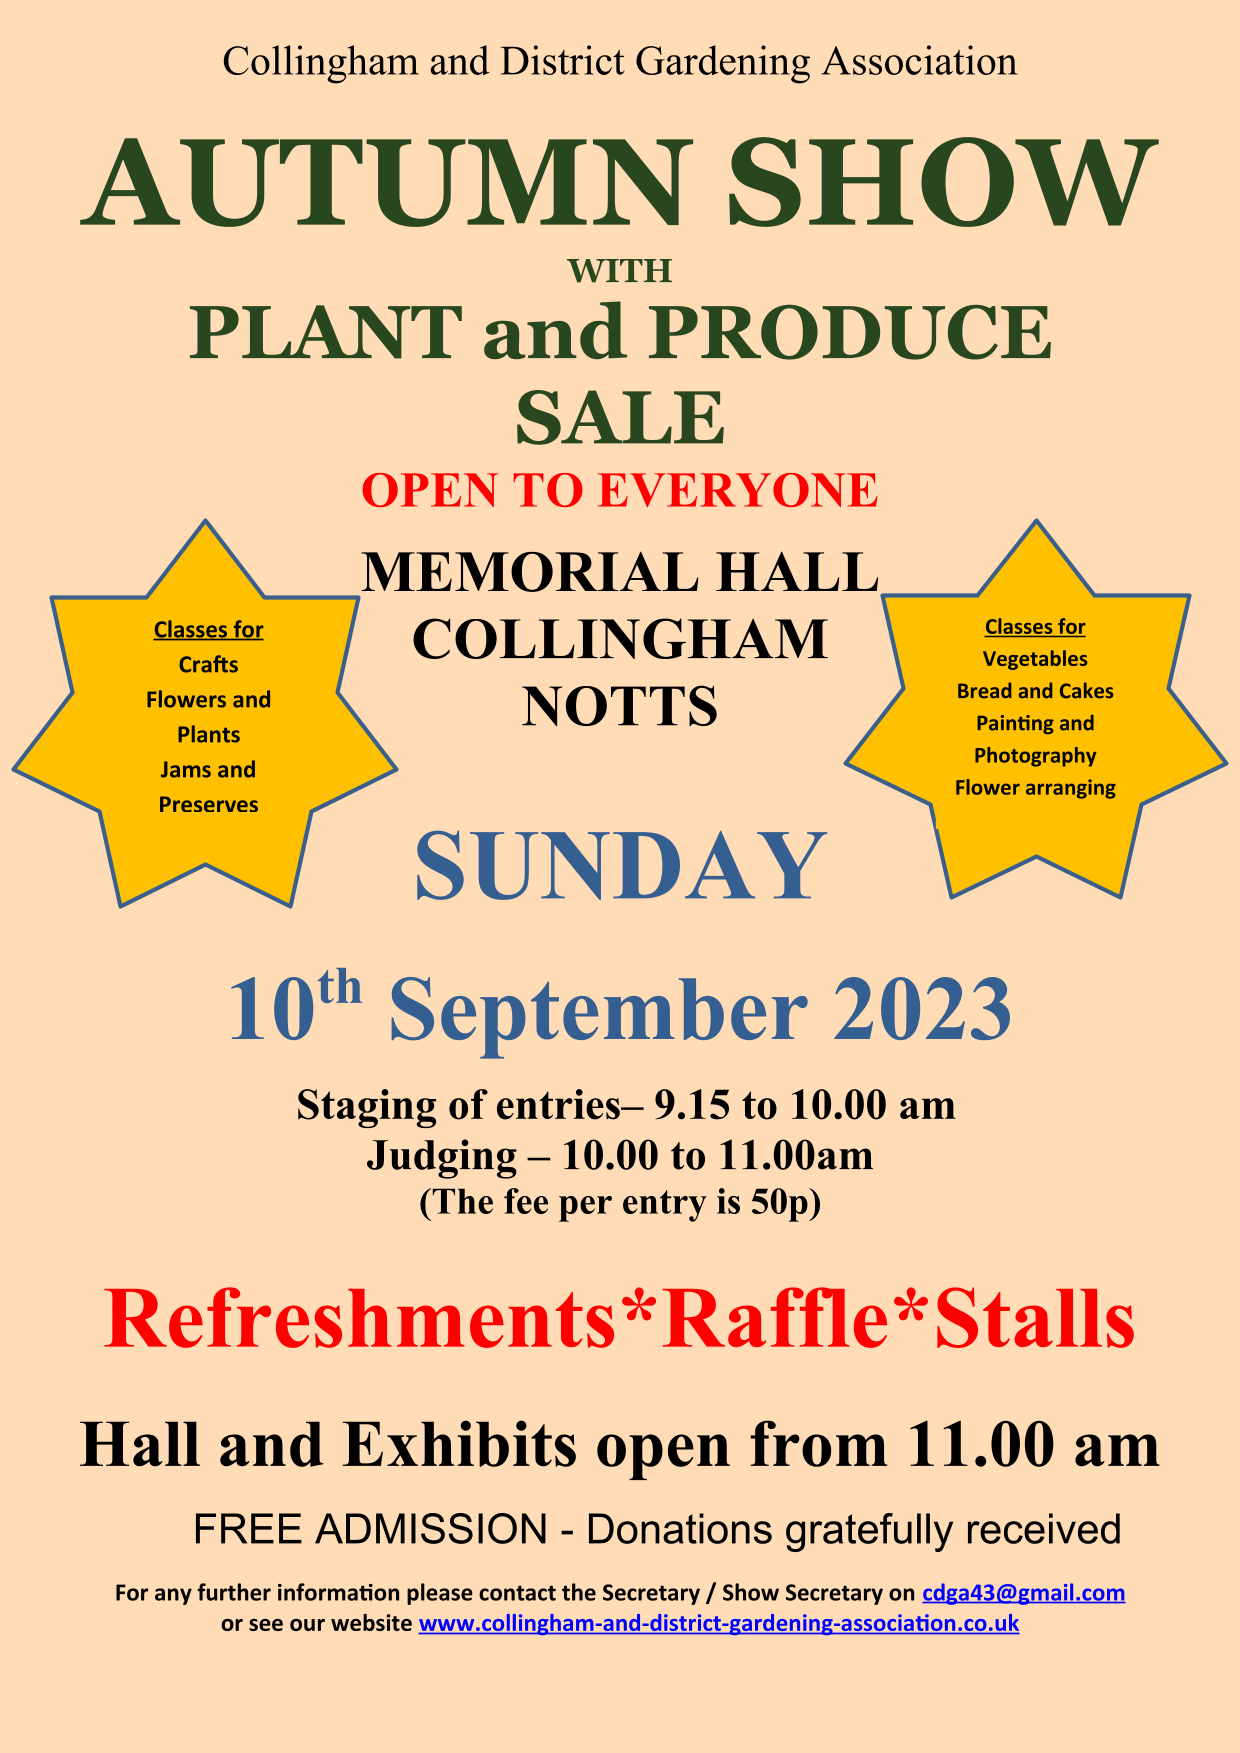 Collingham and District Gardening Association 2023 AUTUMN SHOW